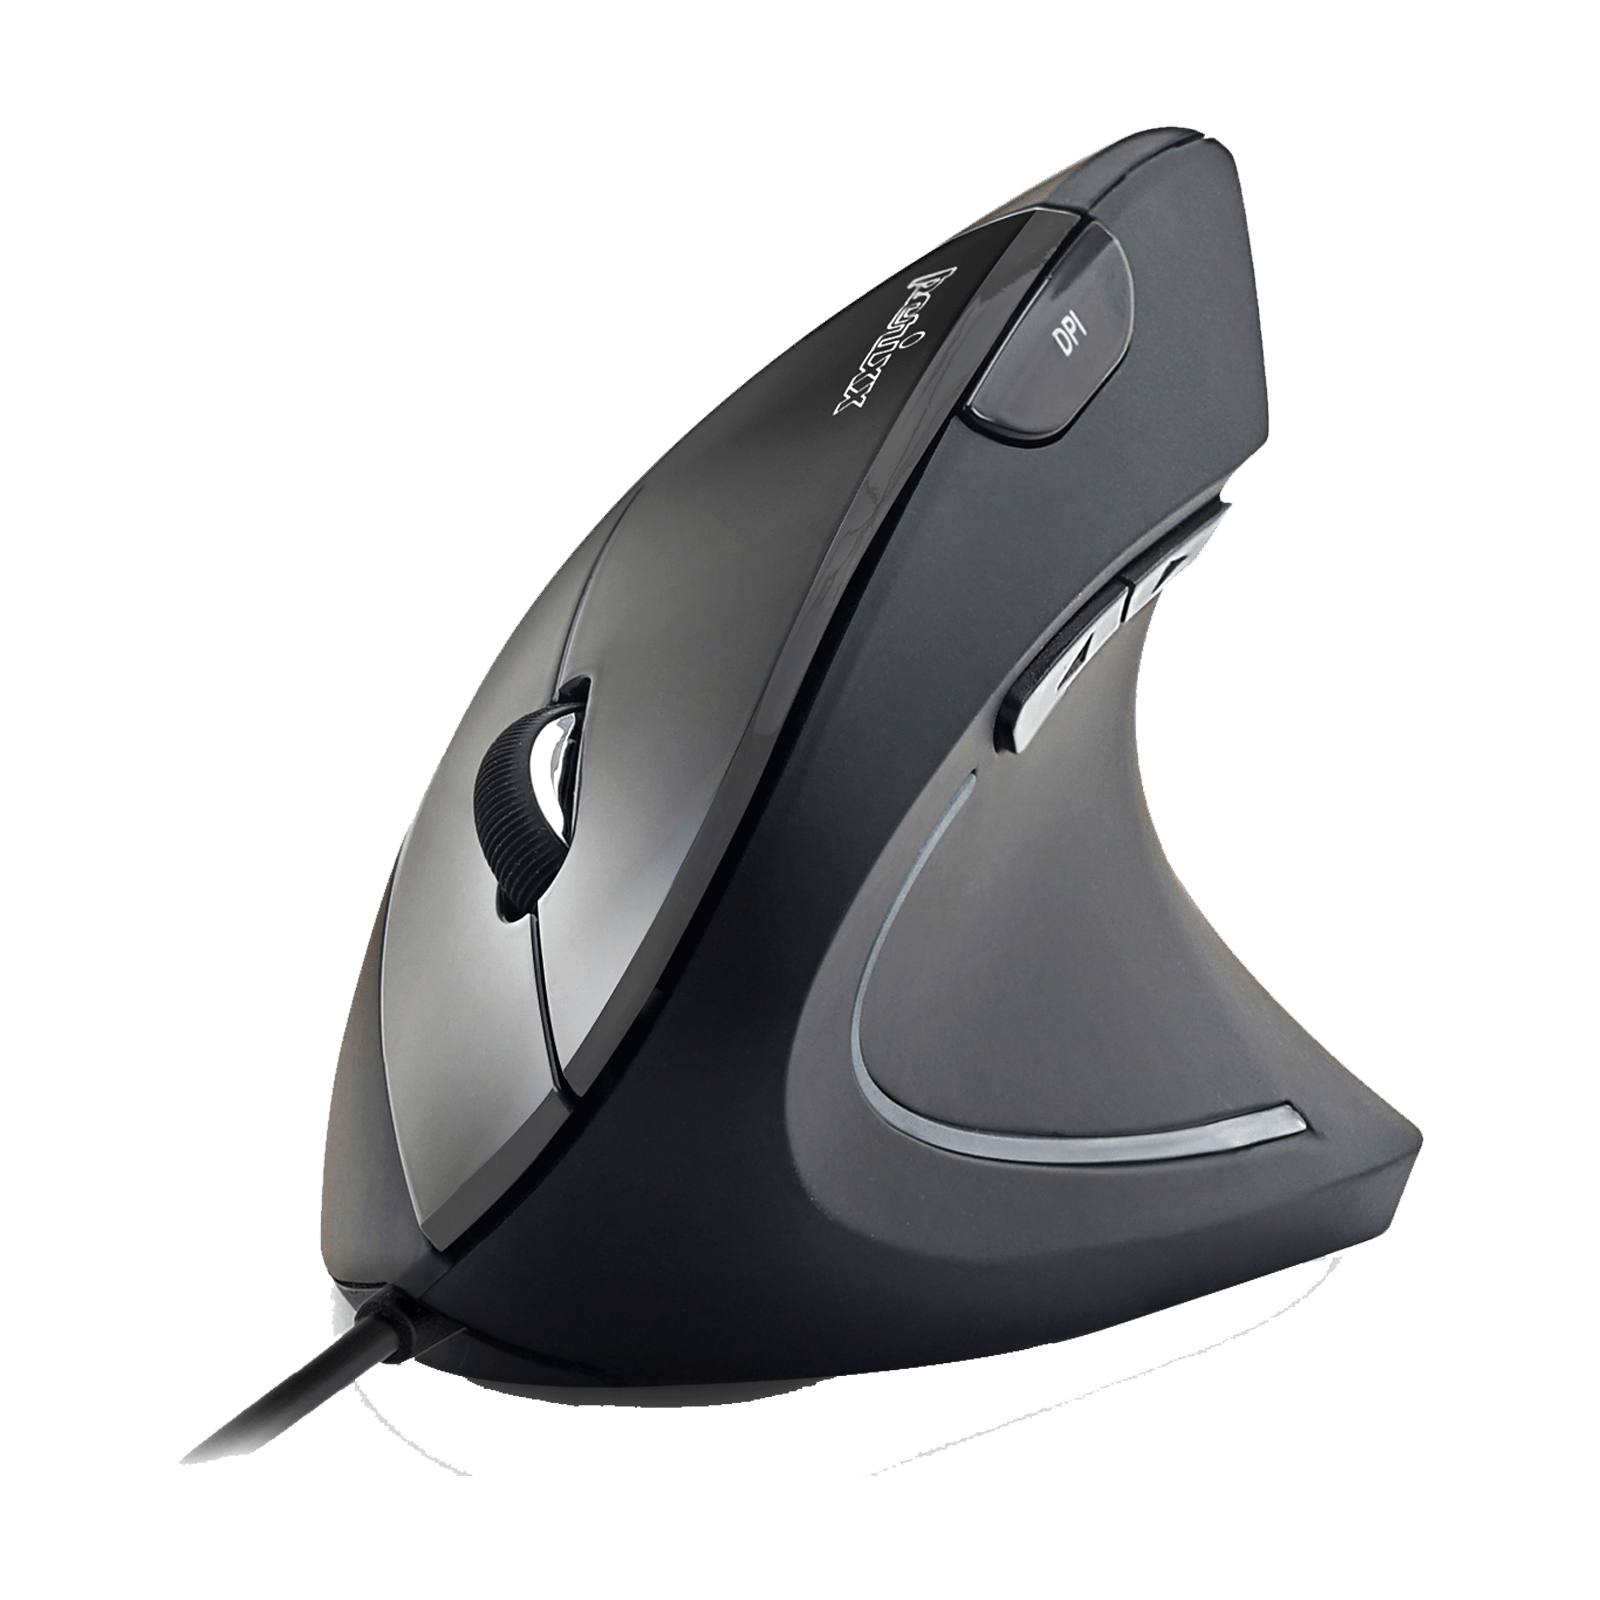 PERIMICE-513 - Wired Ergonomic Vertical Mouse - Perixx Europe